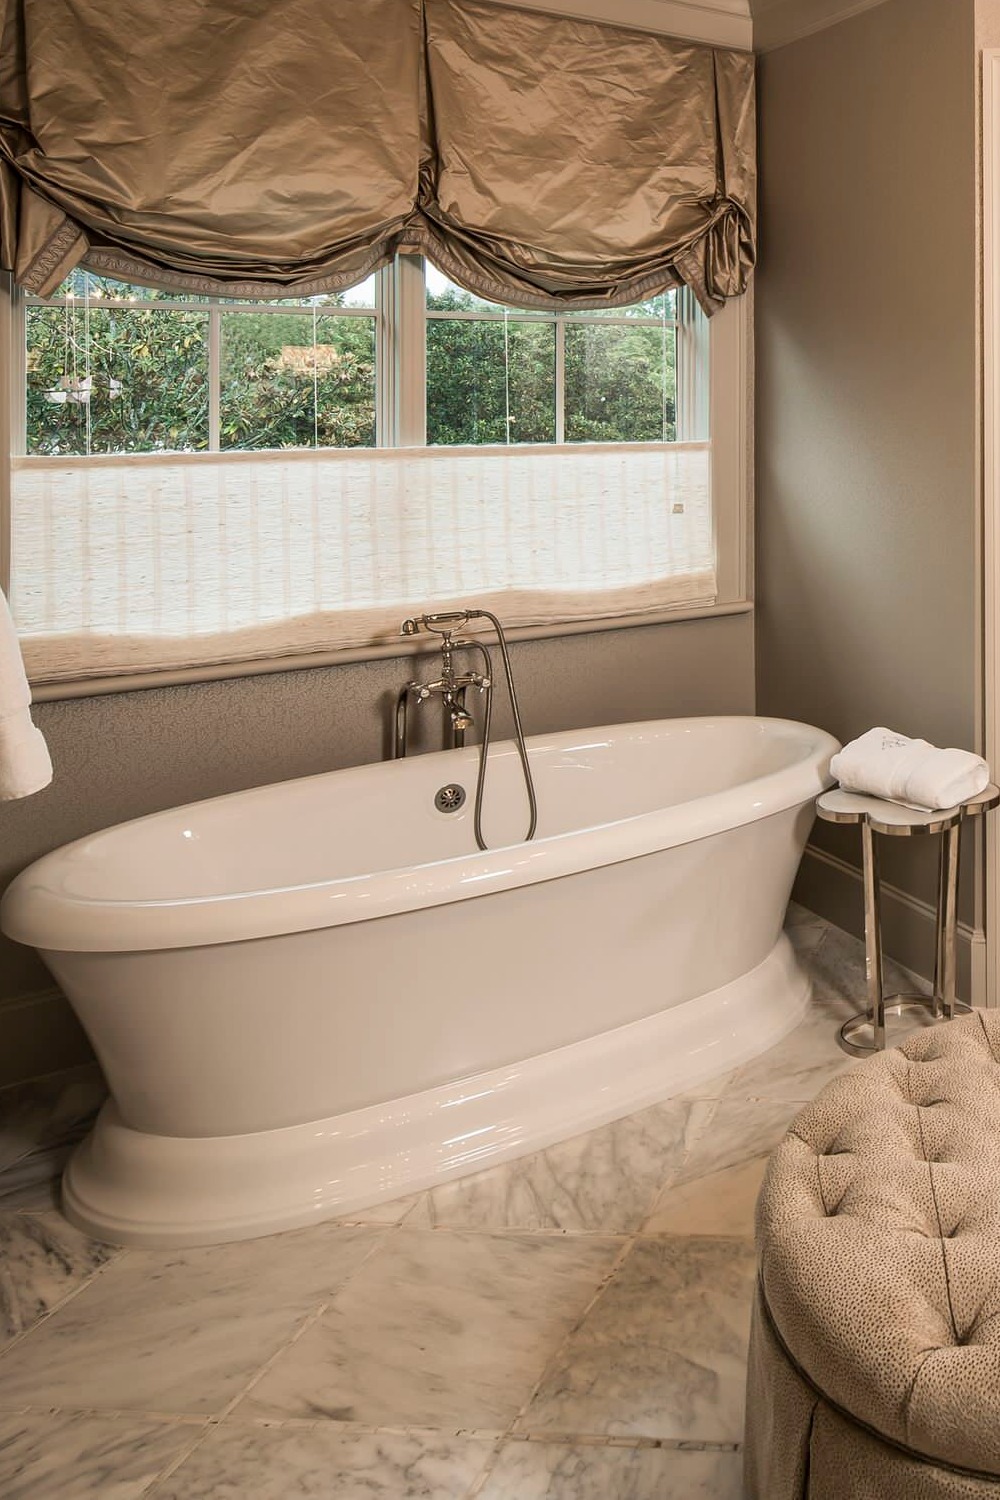 White Marble Floor Tiles Freestanding Bathtub Towel Rack Gray Wall Paints